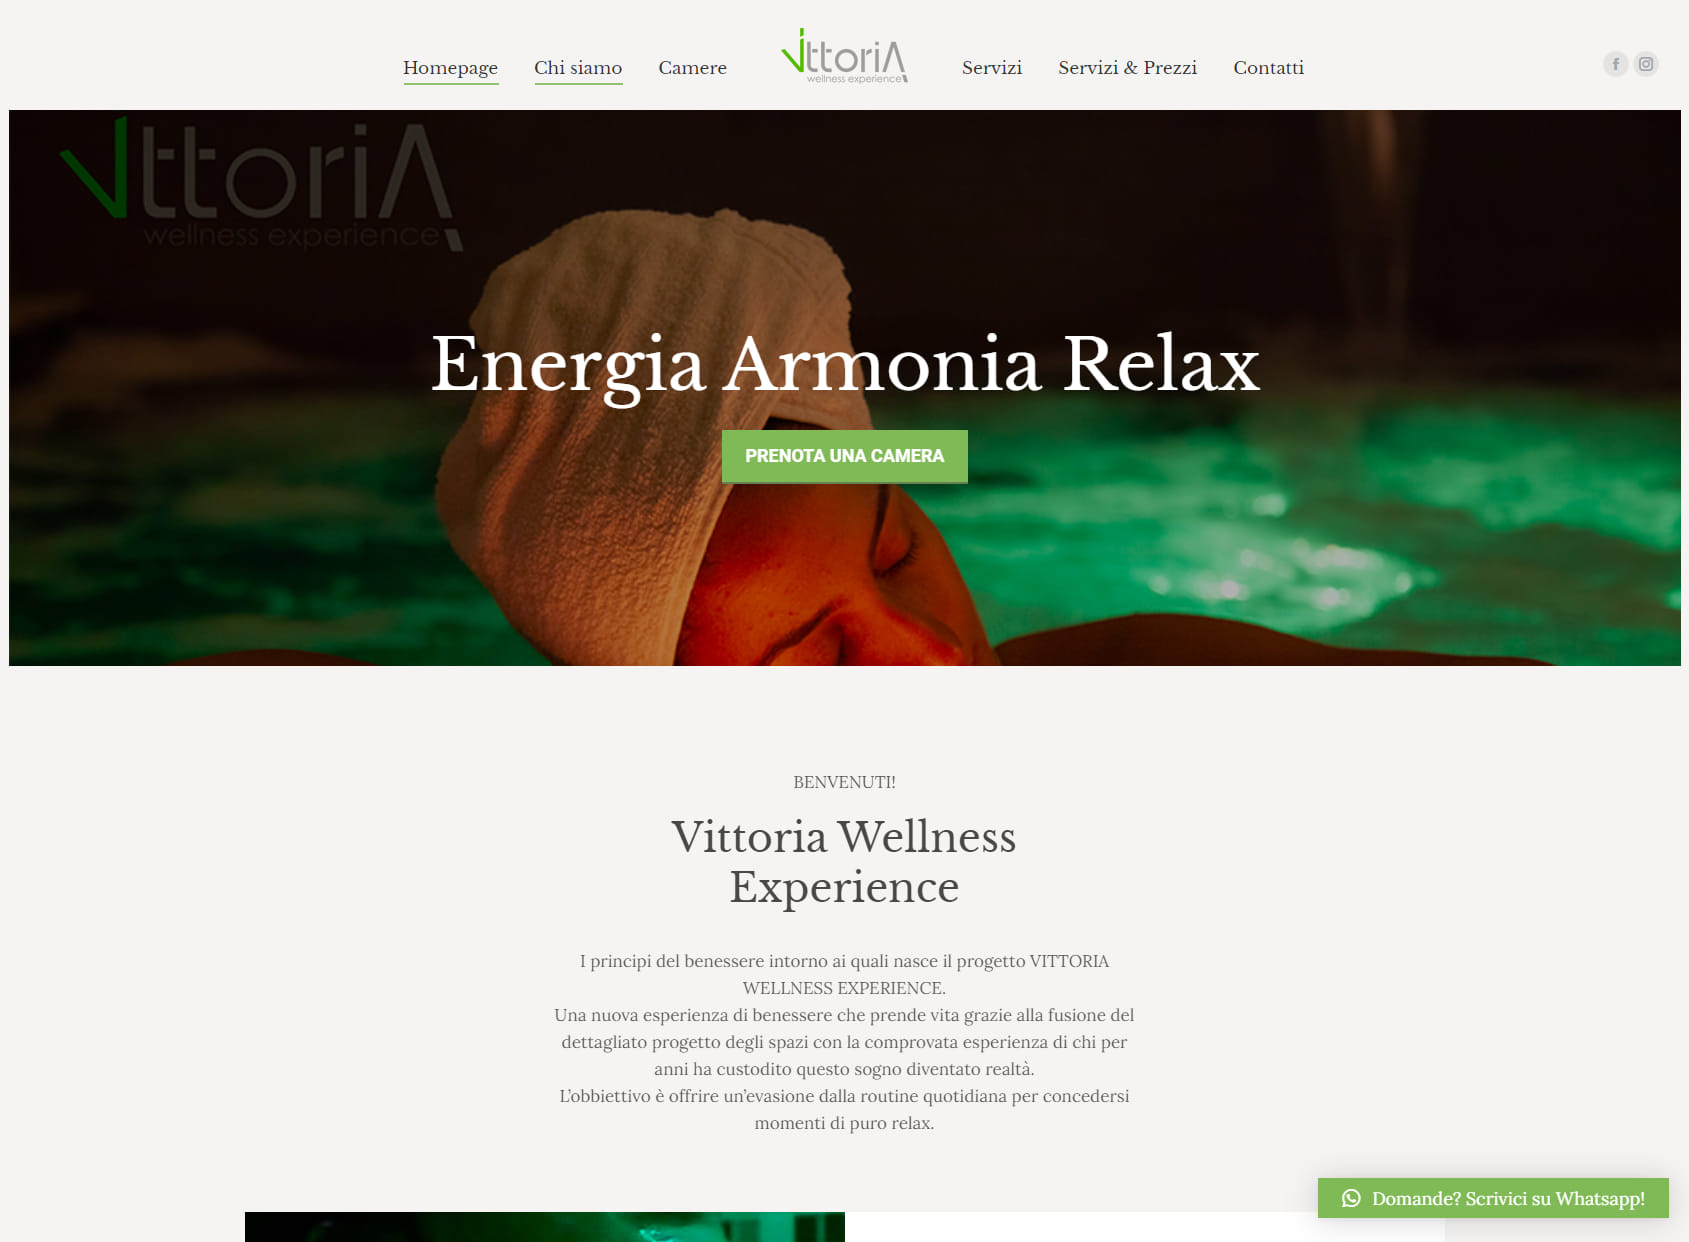 Vittoria Wellness Experience - Hotel - Centro benessere